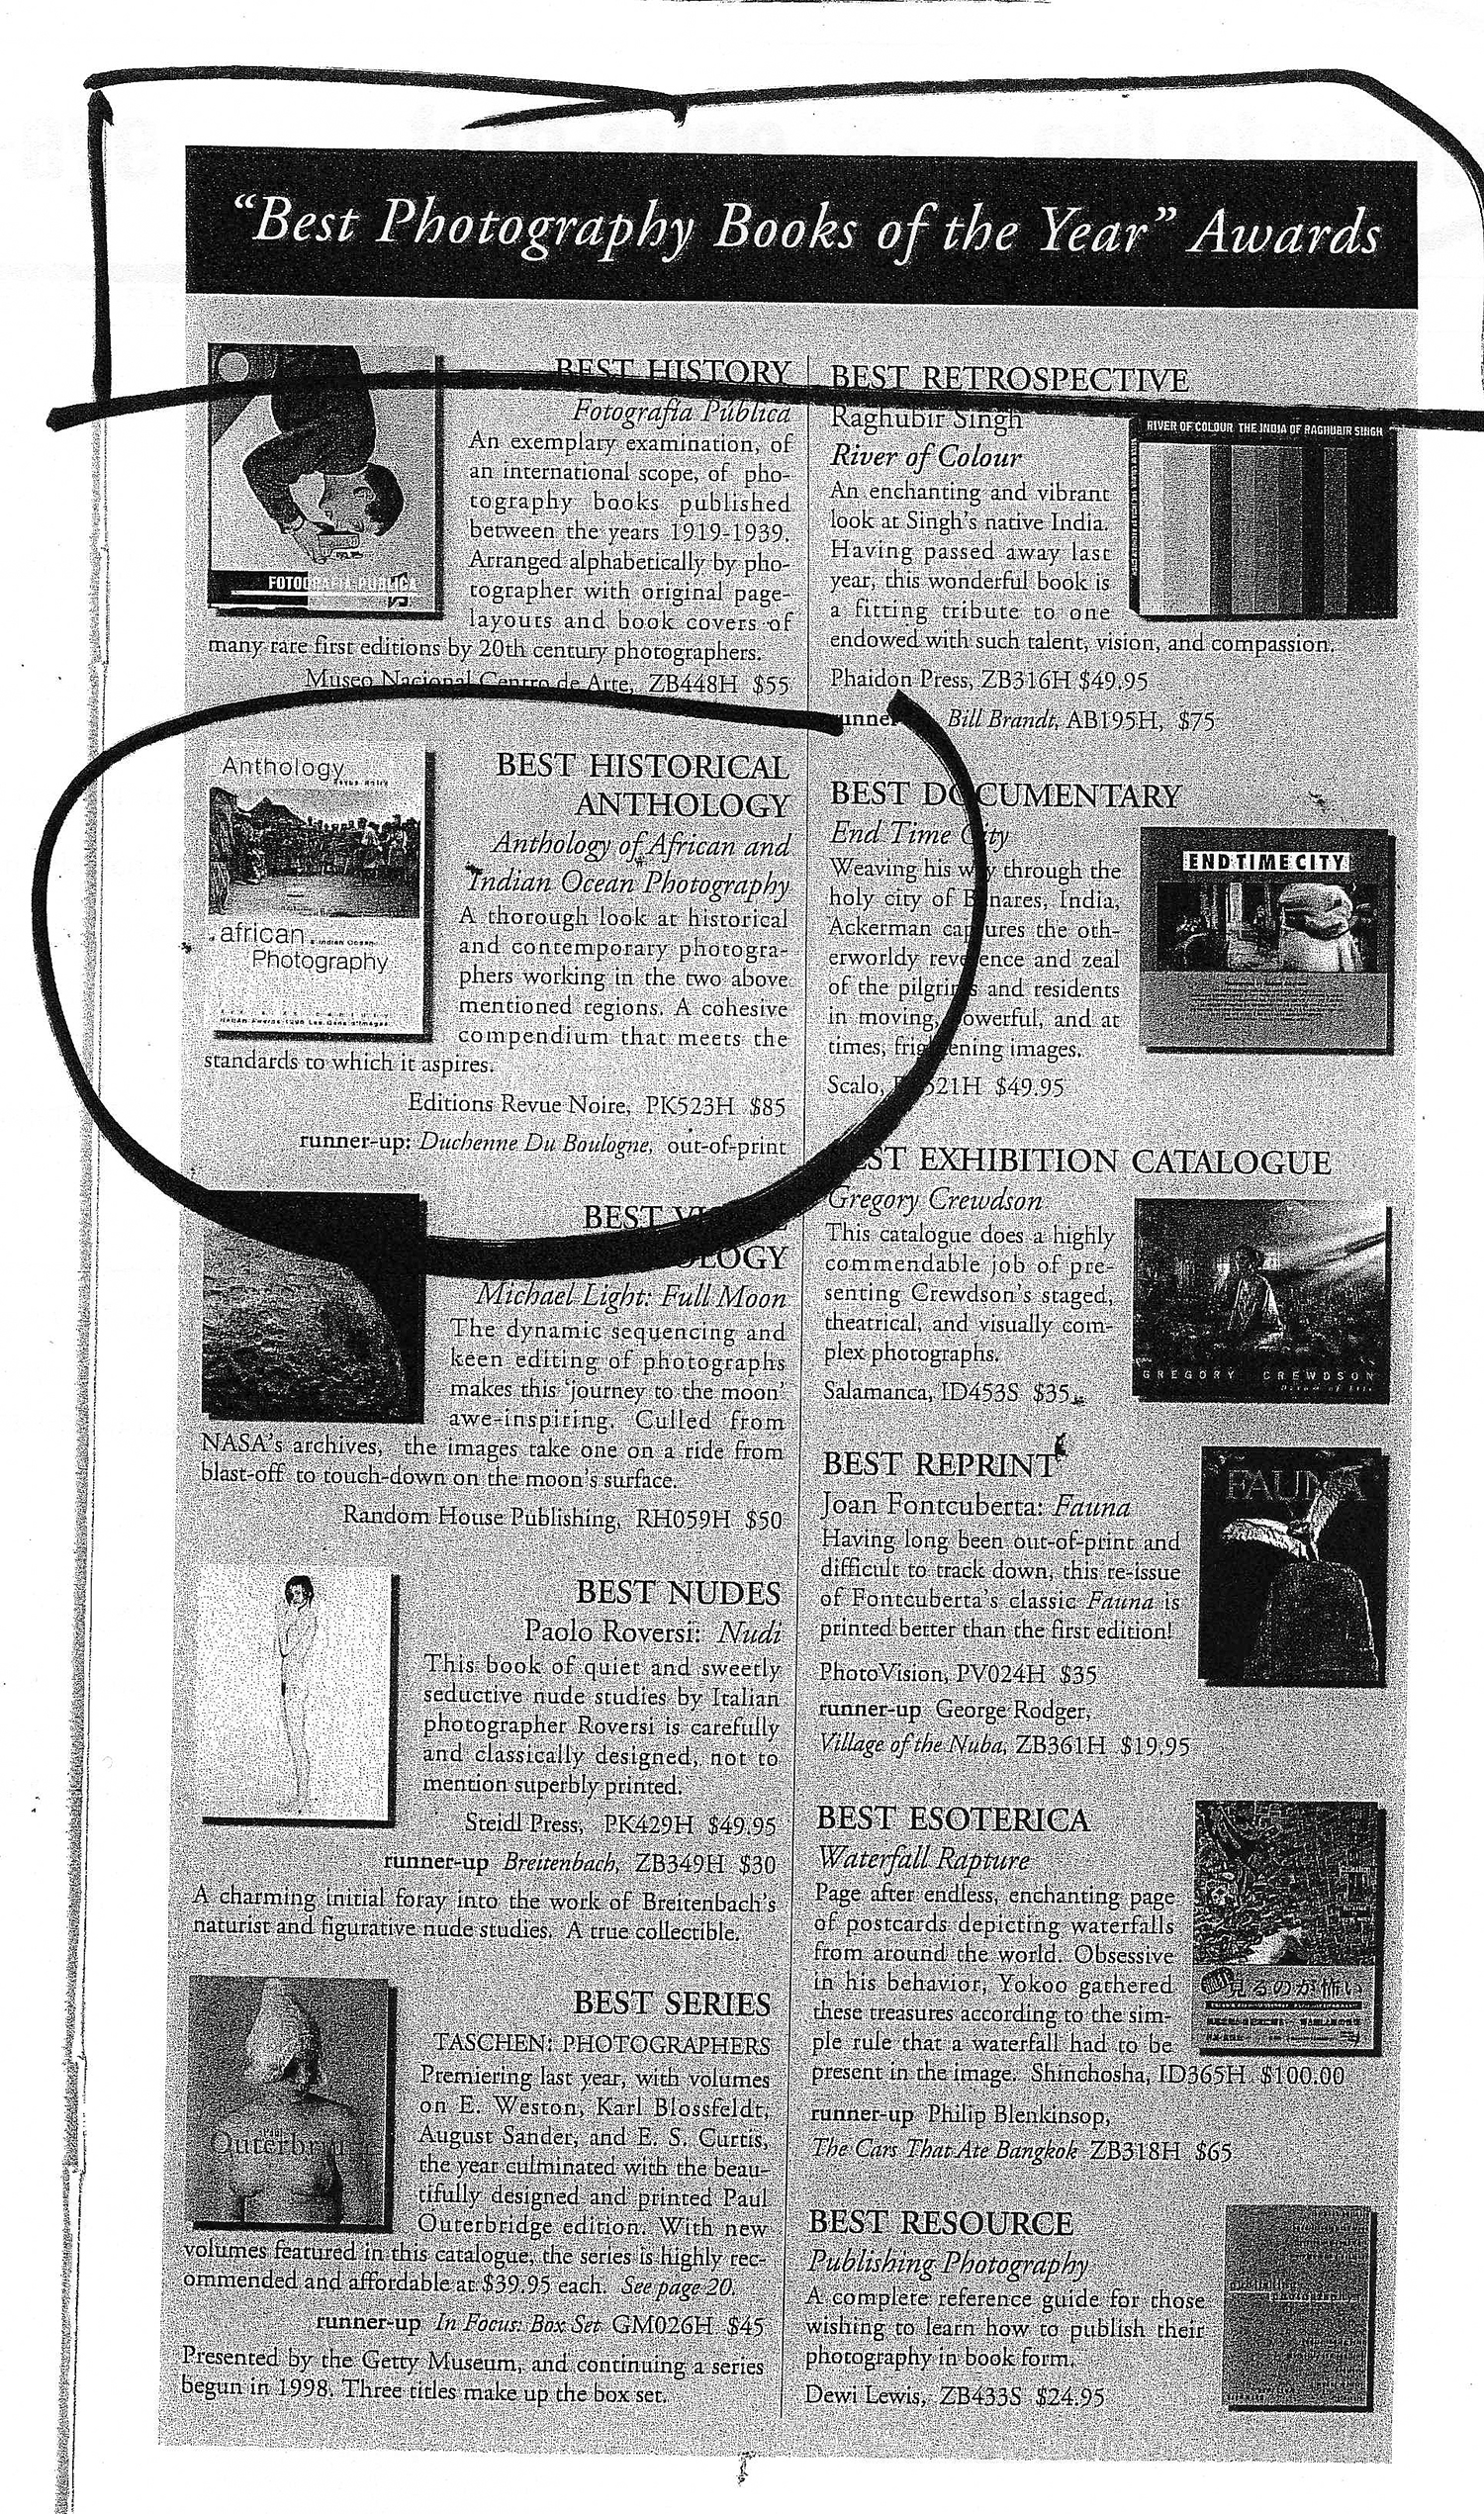 REVUE NOIRE revue de presse: New York Times dec 1999 Best Photography Books of the Year Awards 1999: Anthology of African Photography, Revue Noire-DAP éditions